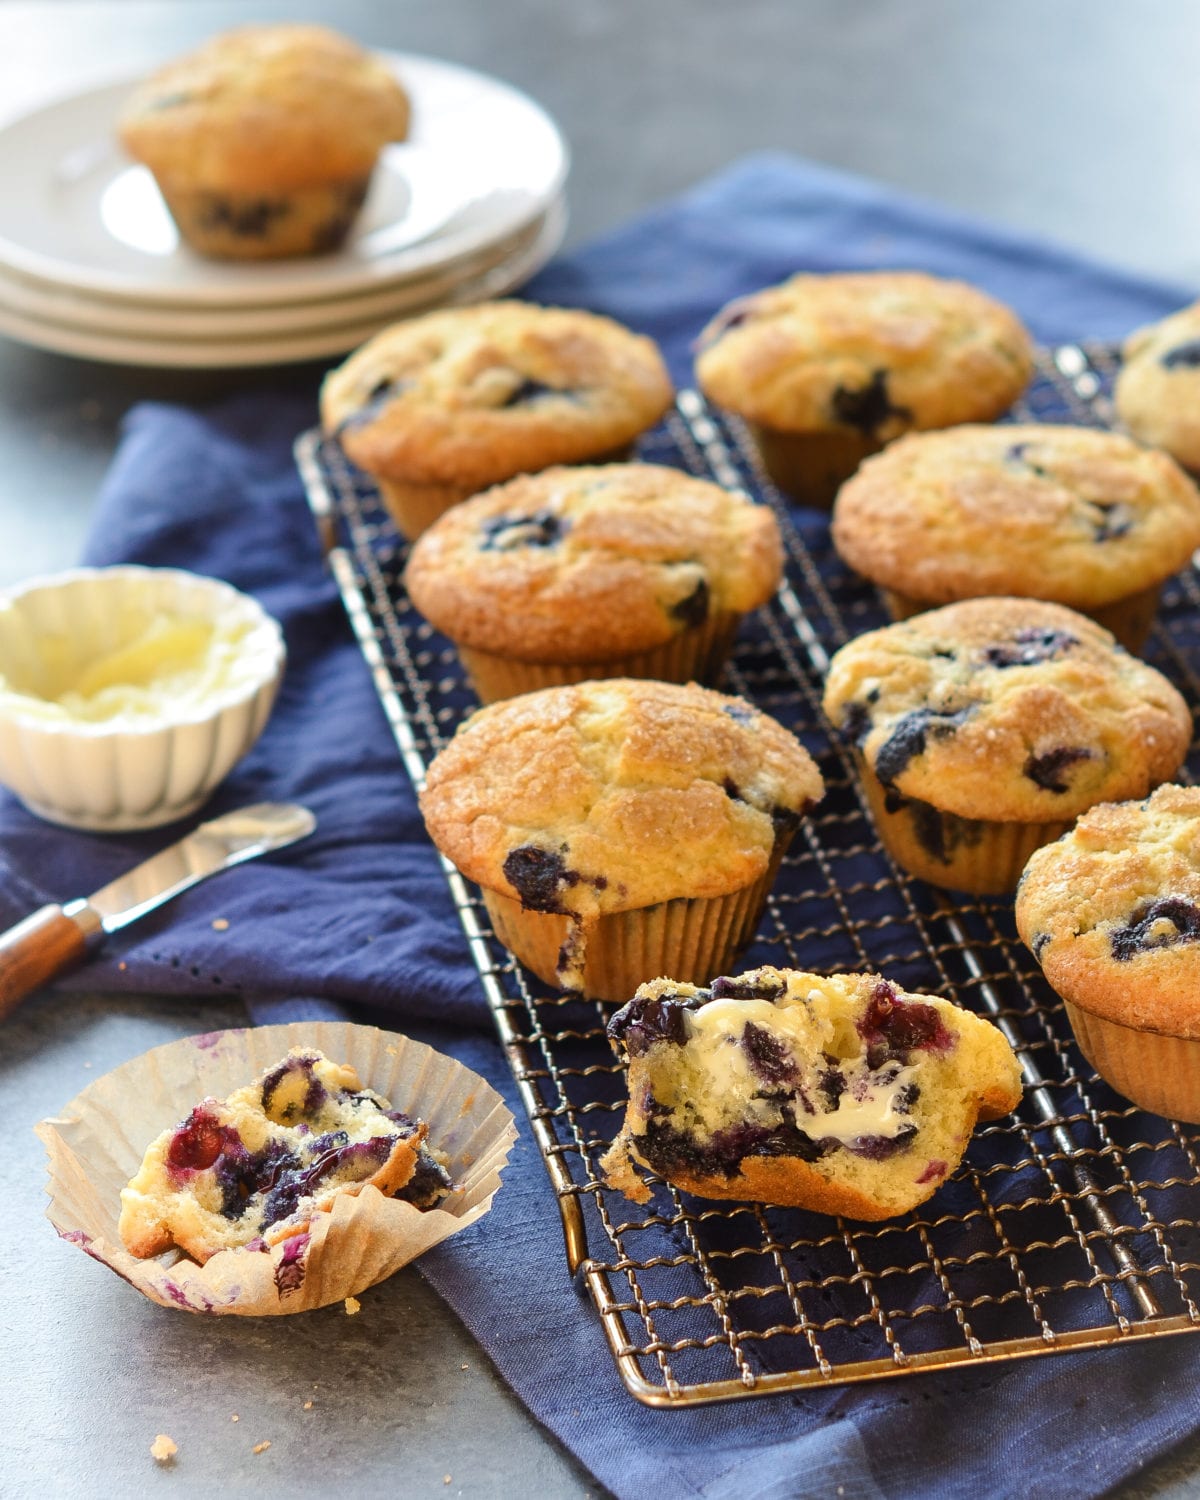 https://www.onceuponachef.com/images/2014/07/Best-Blueberry-Muffins-1-1200x1500.jpg